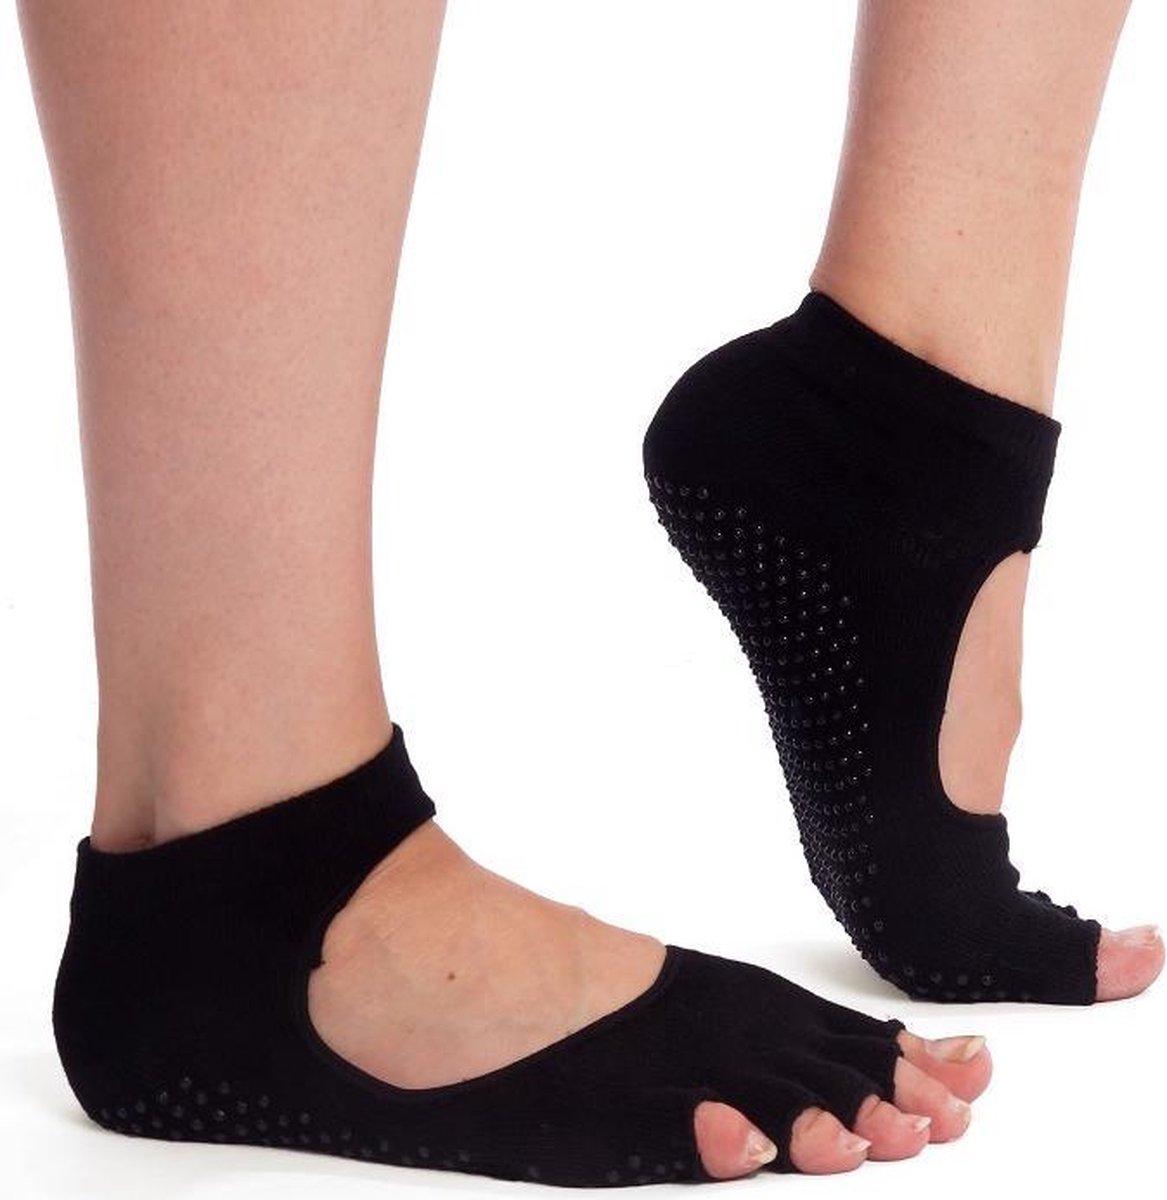 Yogasokken & Pilatessokken - Antislip sokken * 'Ballerina' - zwart - meerdere kleuren verkrijgbaar - Pilateswinkel * Yoga sokken * Pilates sokken